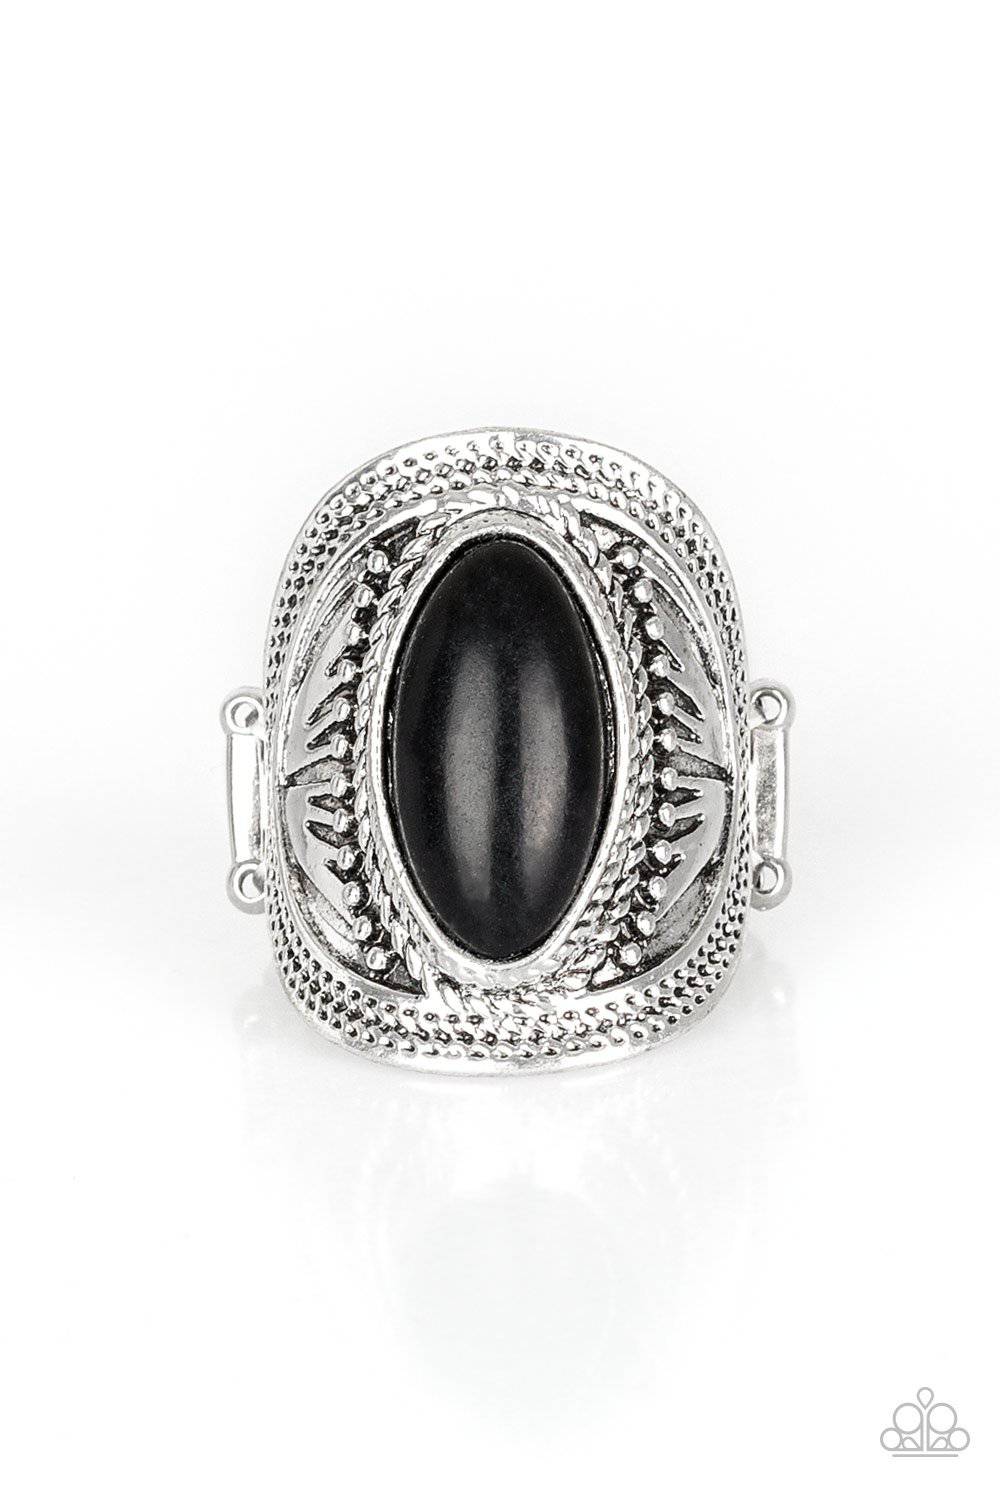 Ground RULER Black Ring - Paparazzi Accessories - GlaMarous Titi Jewels